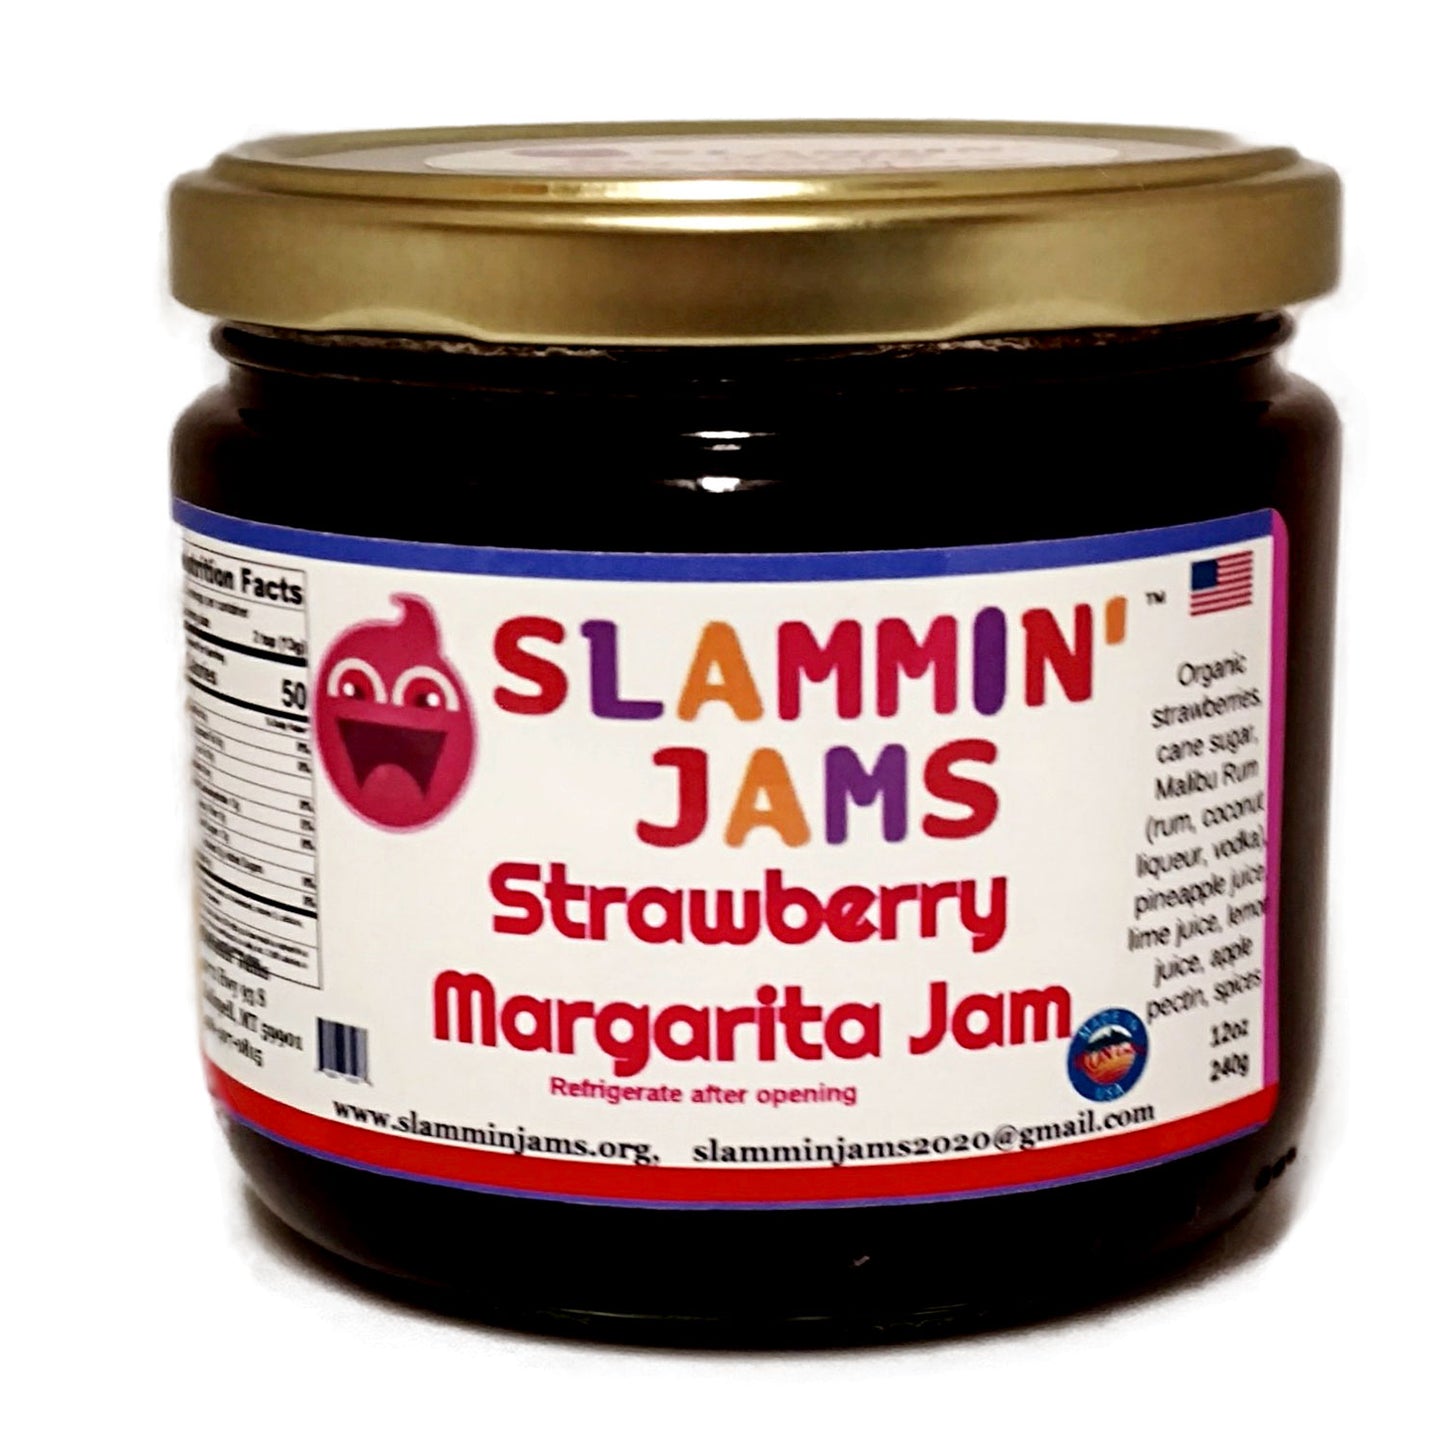 Slammin' Jams Strawberry Margarita Jam - 12 oz